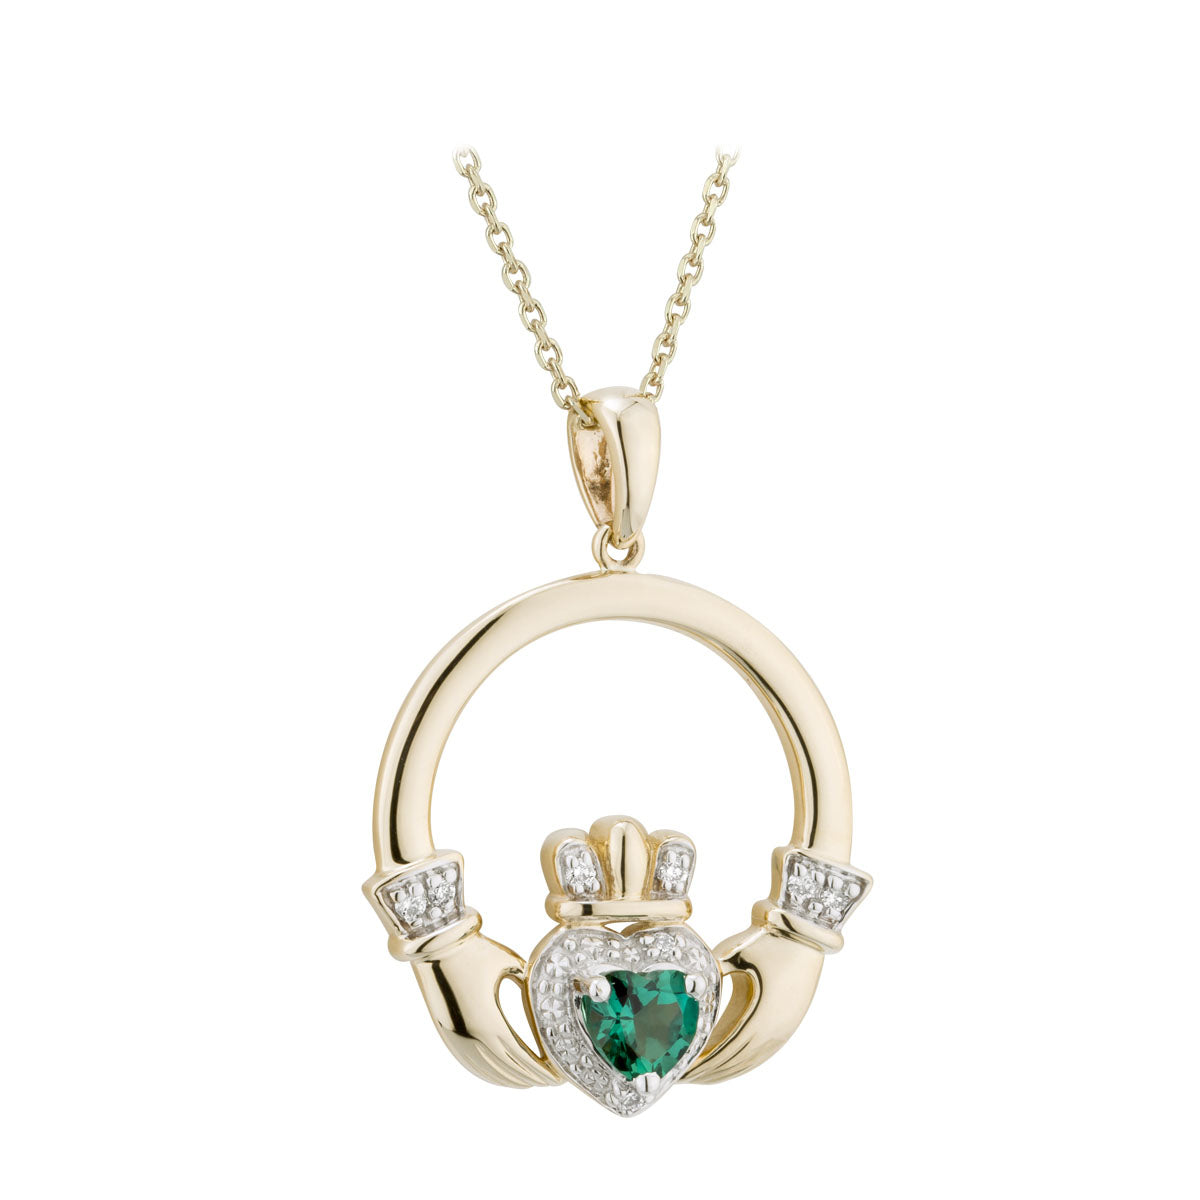 14k gold diamond and emerald claddagh pendant s46096 from Solvar